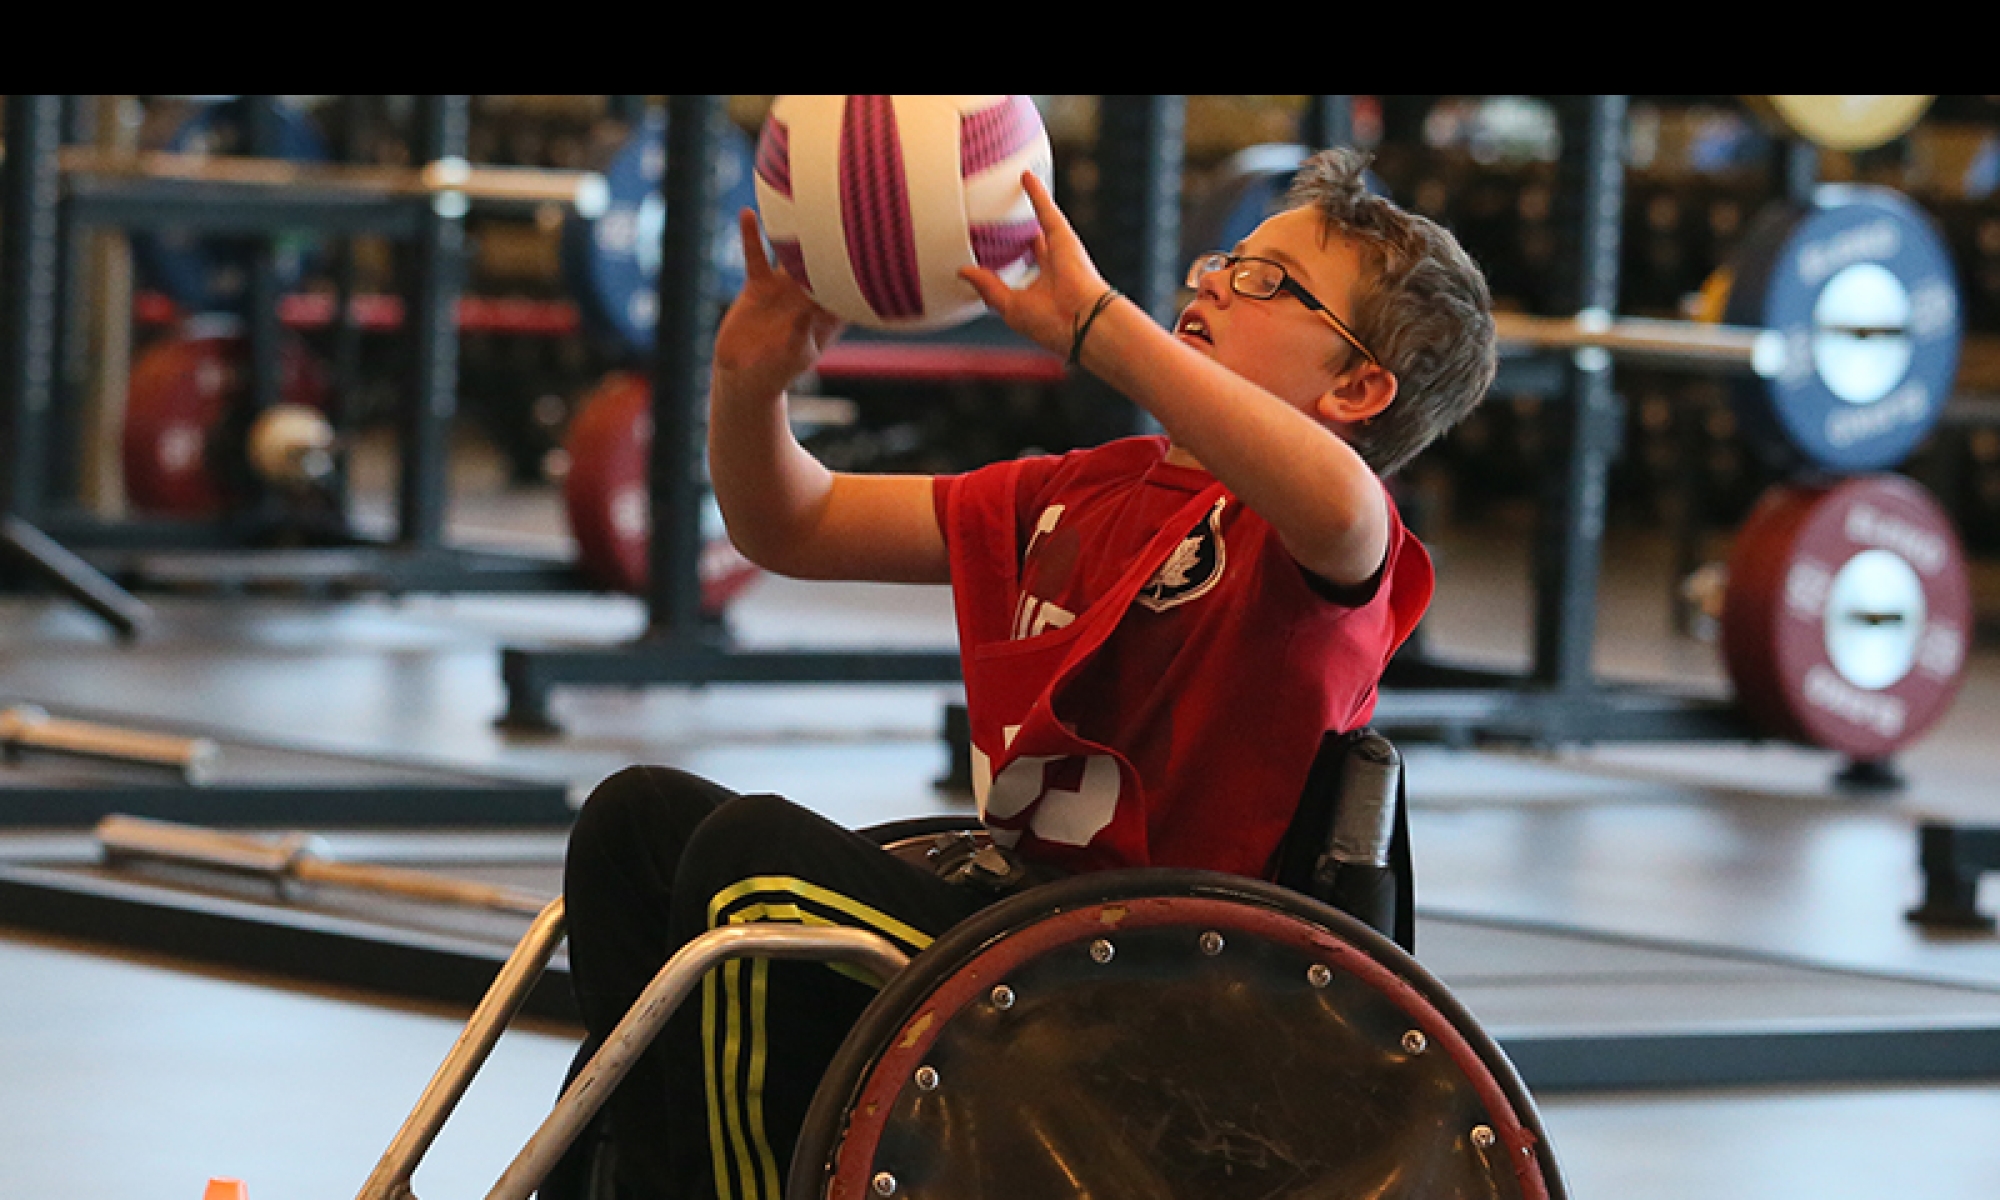 Athlete in a wheelchair throwing a ball